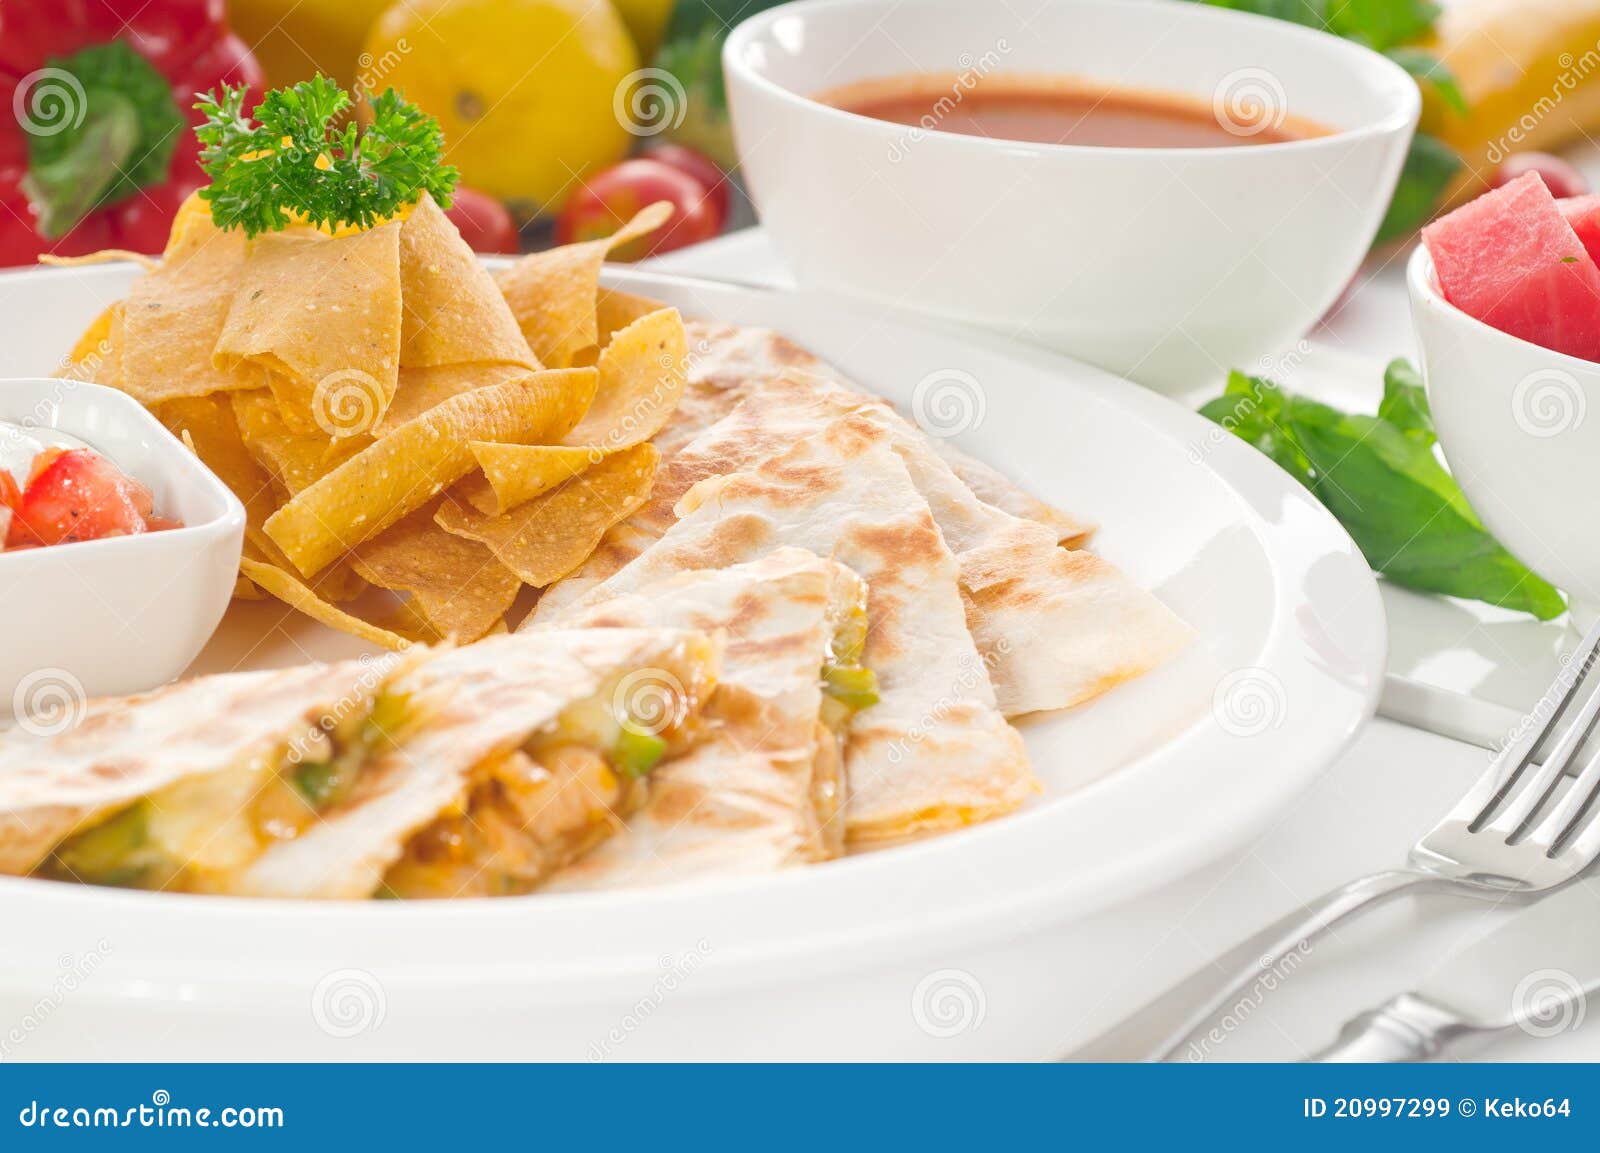 Original Mexican Quesadilla De Pollo Stock Image - Image of green, delicious: 20997299